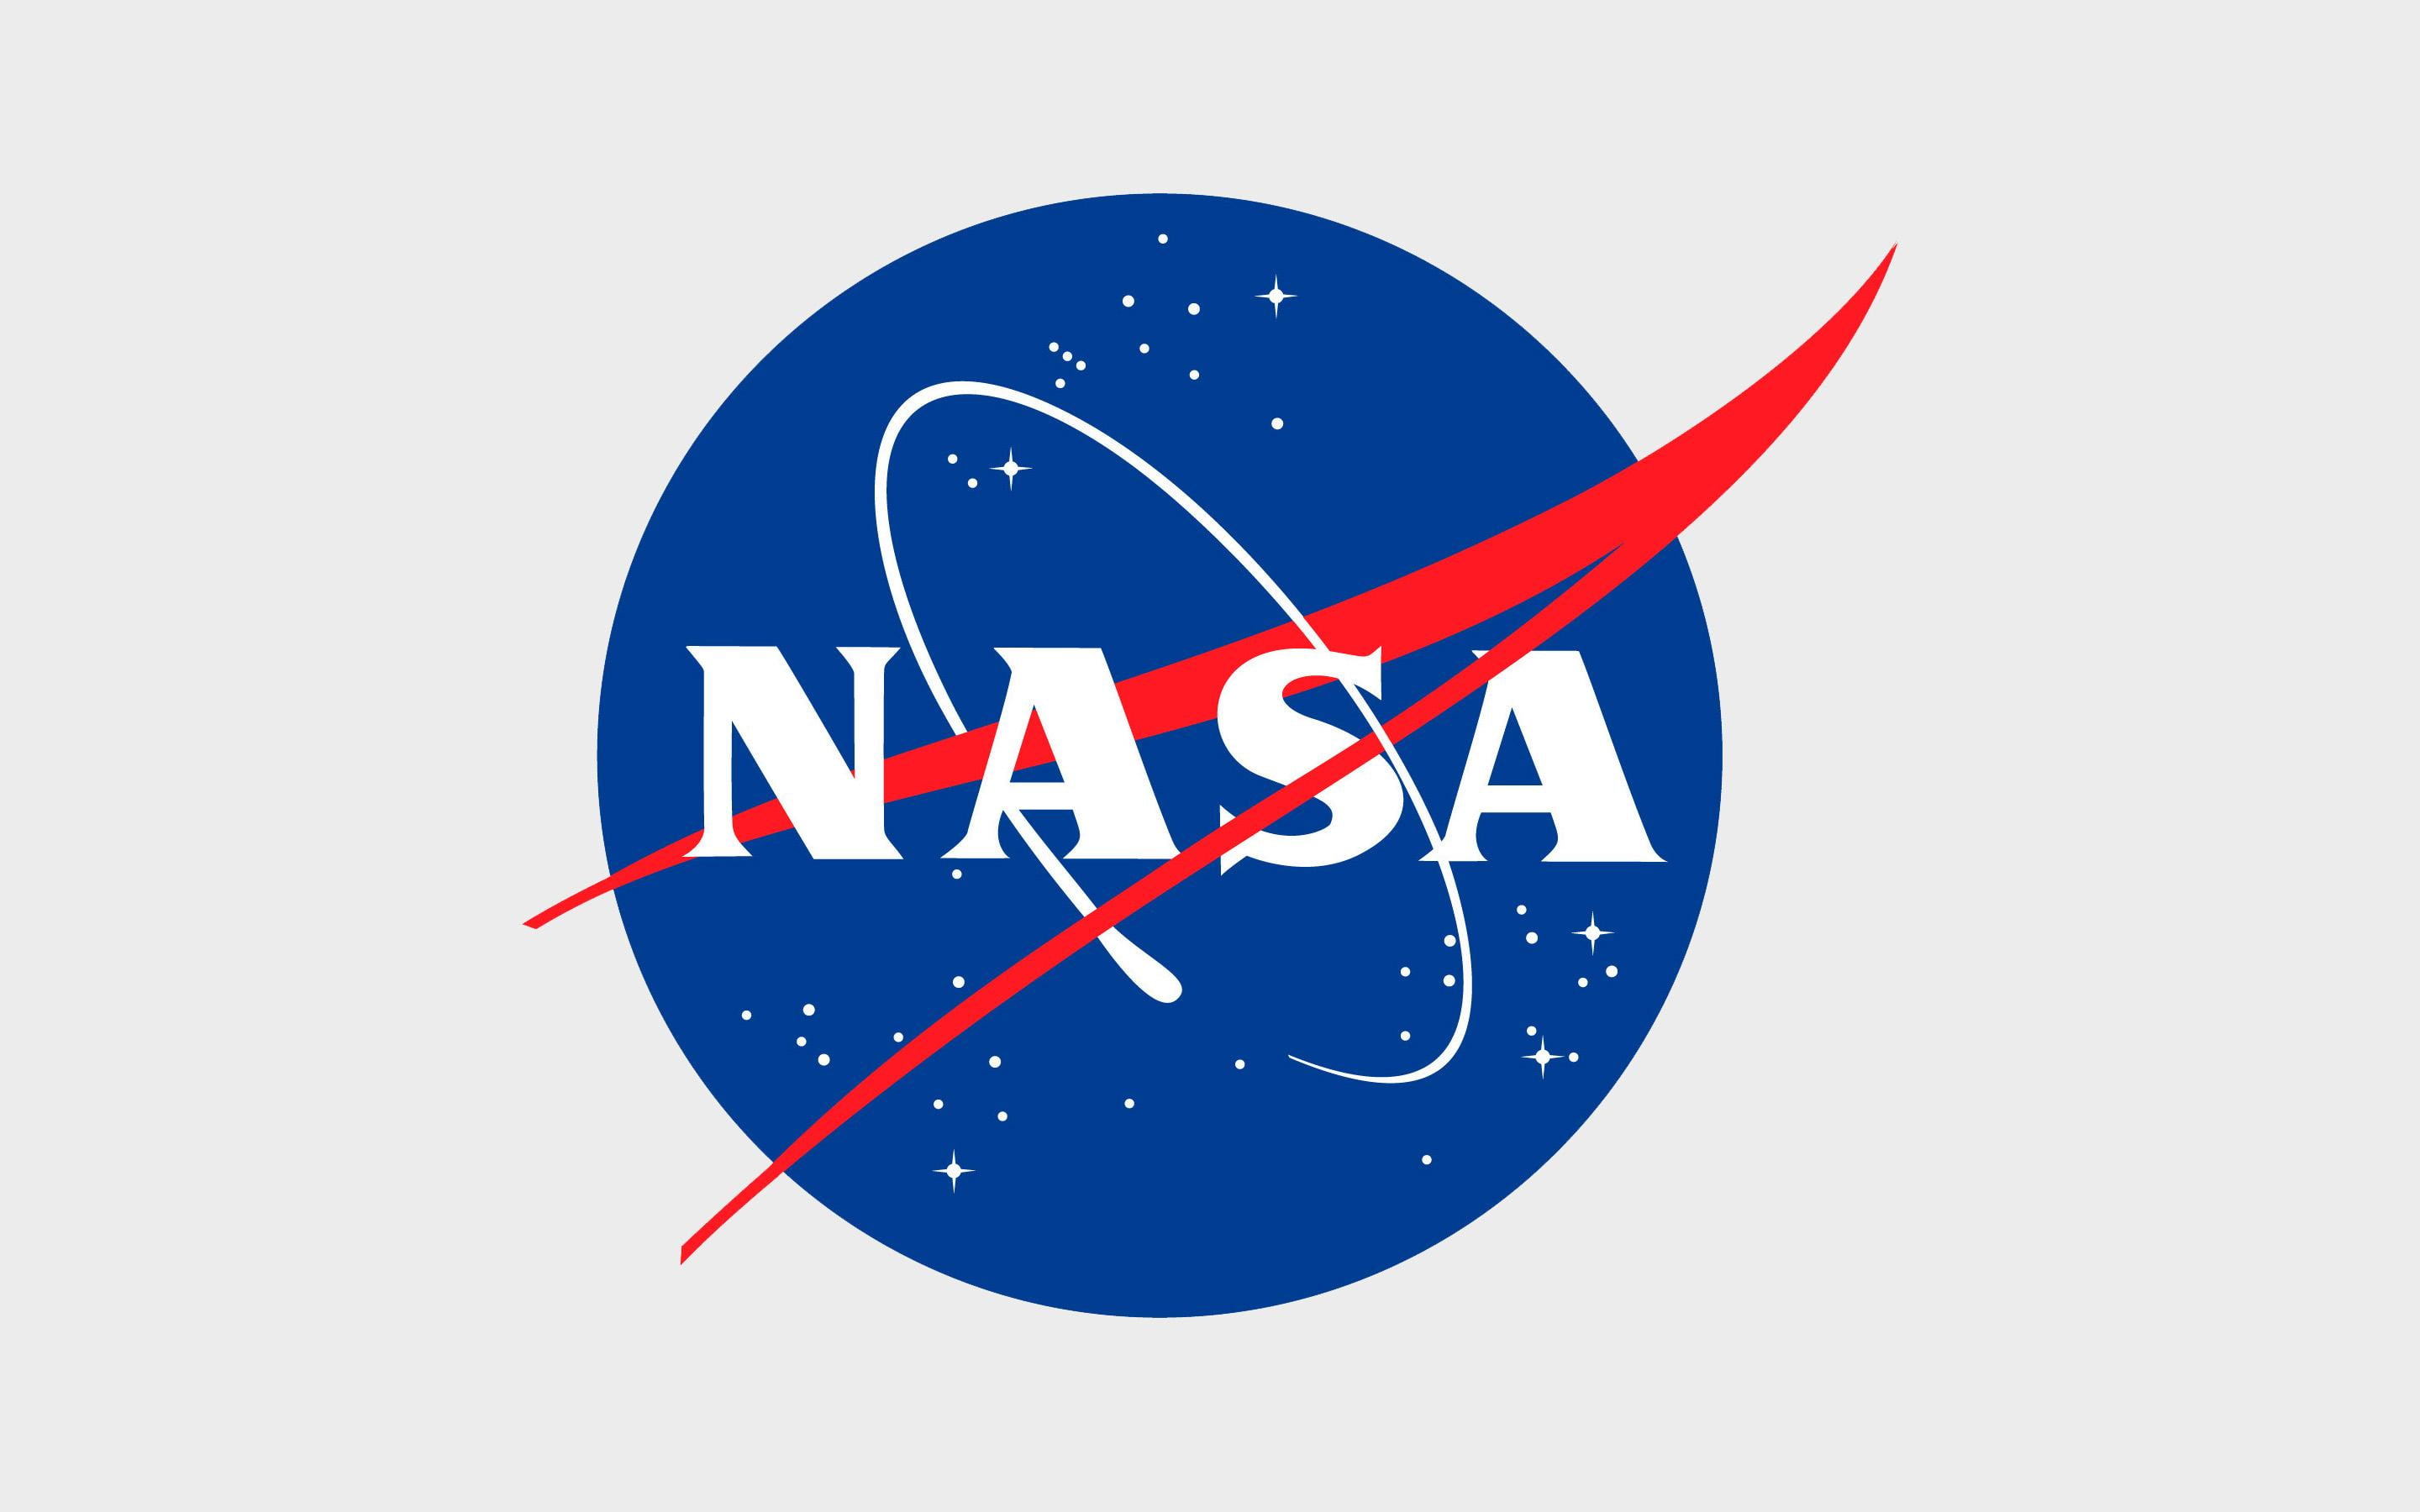 NASA, logo, simple, vector art, blue, studio shot, white background